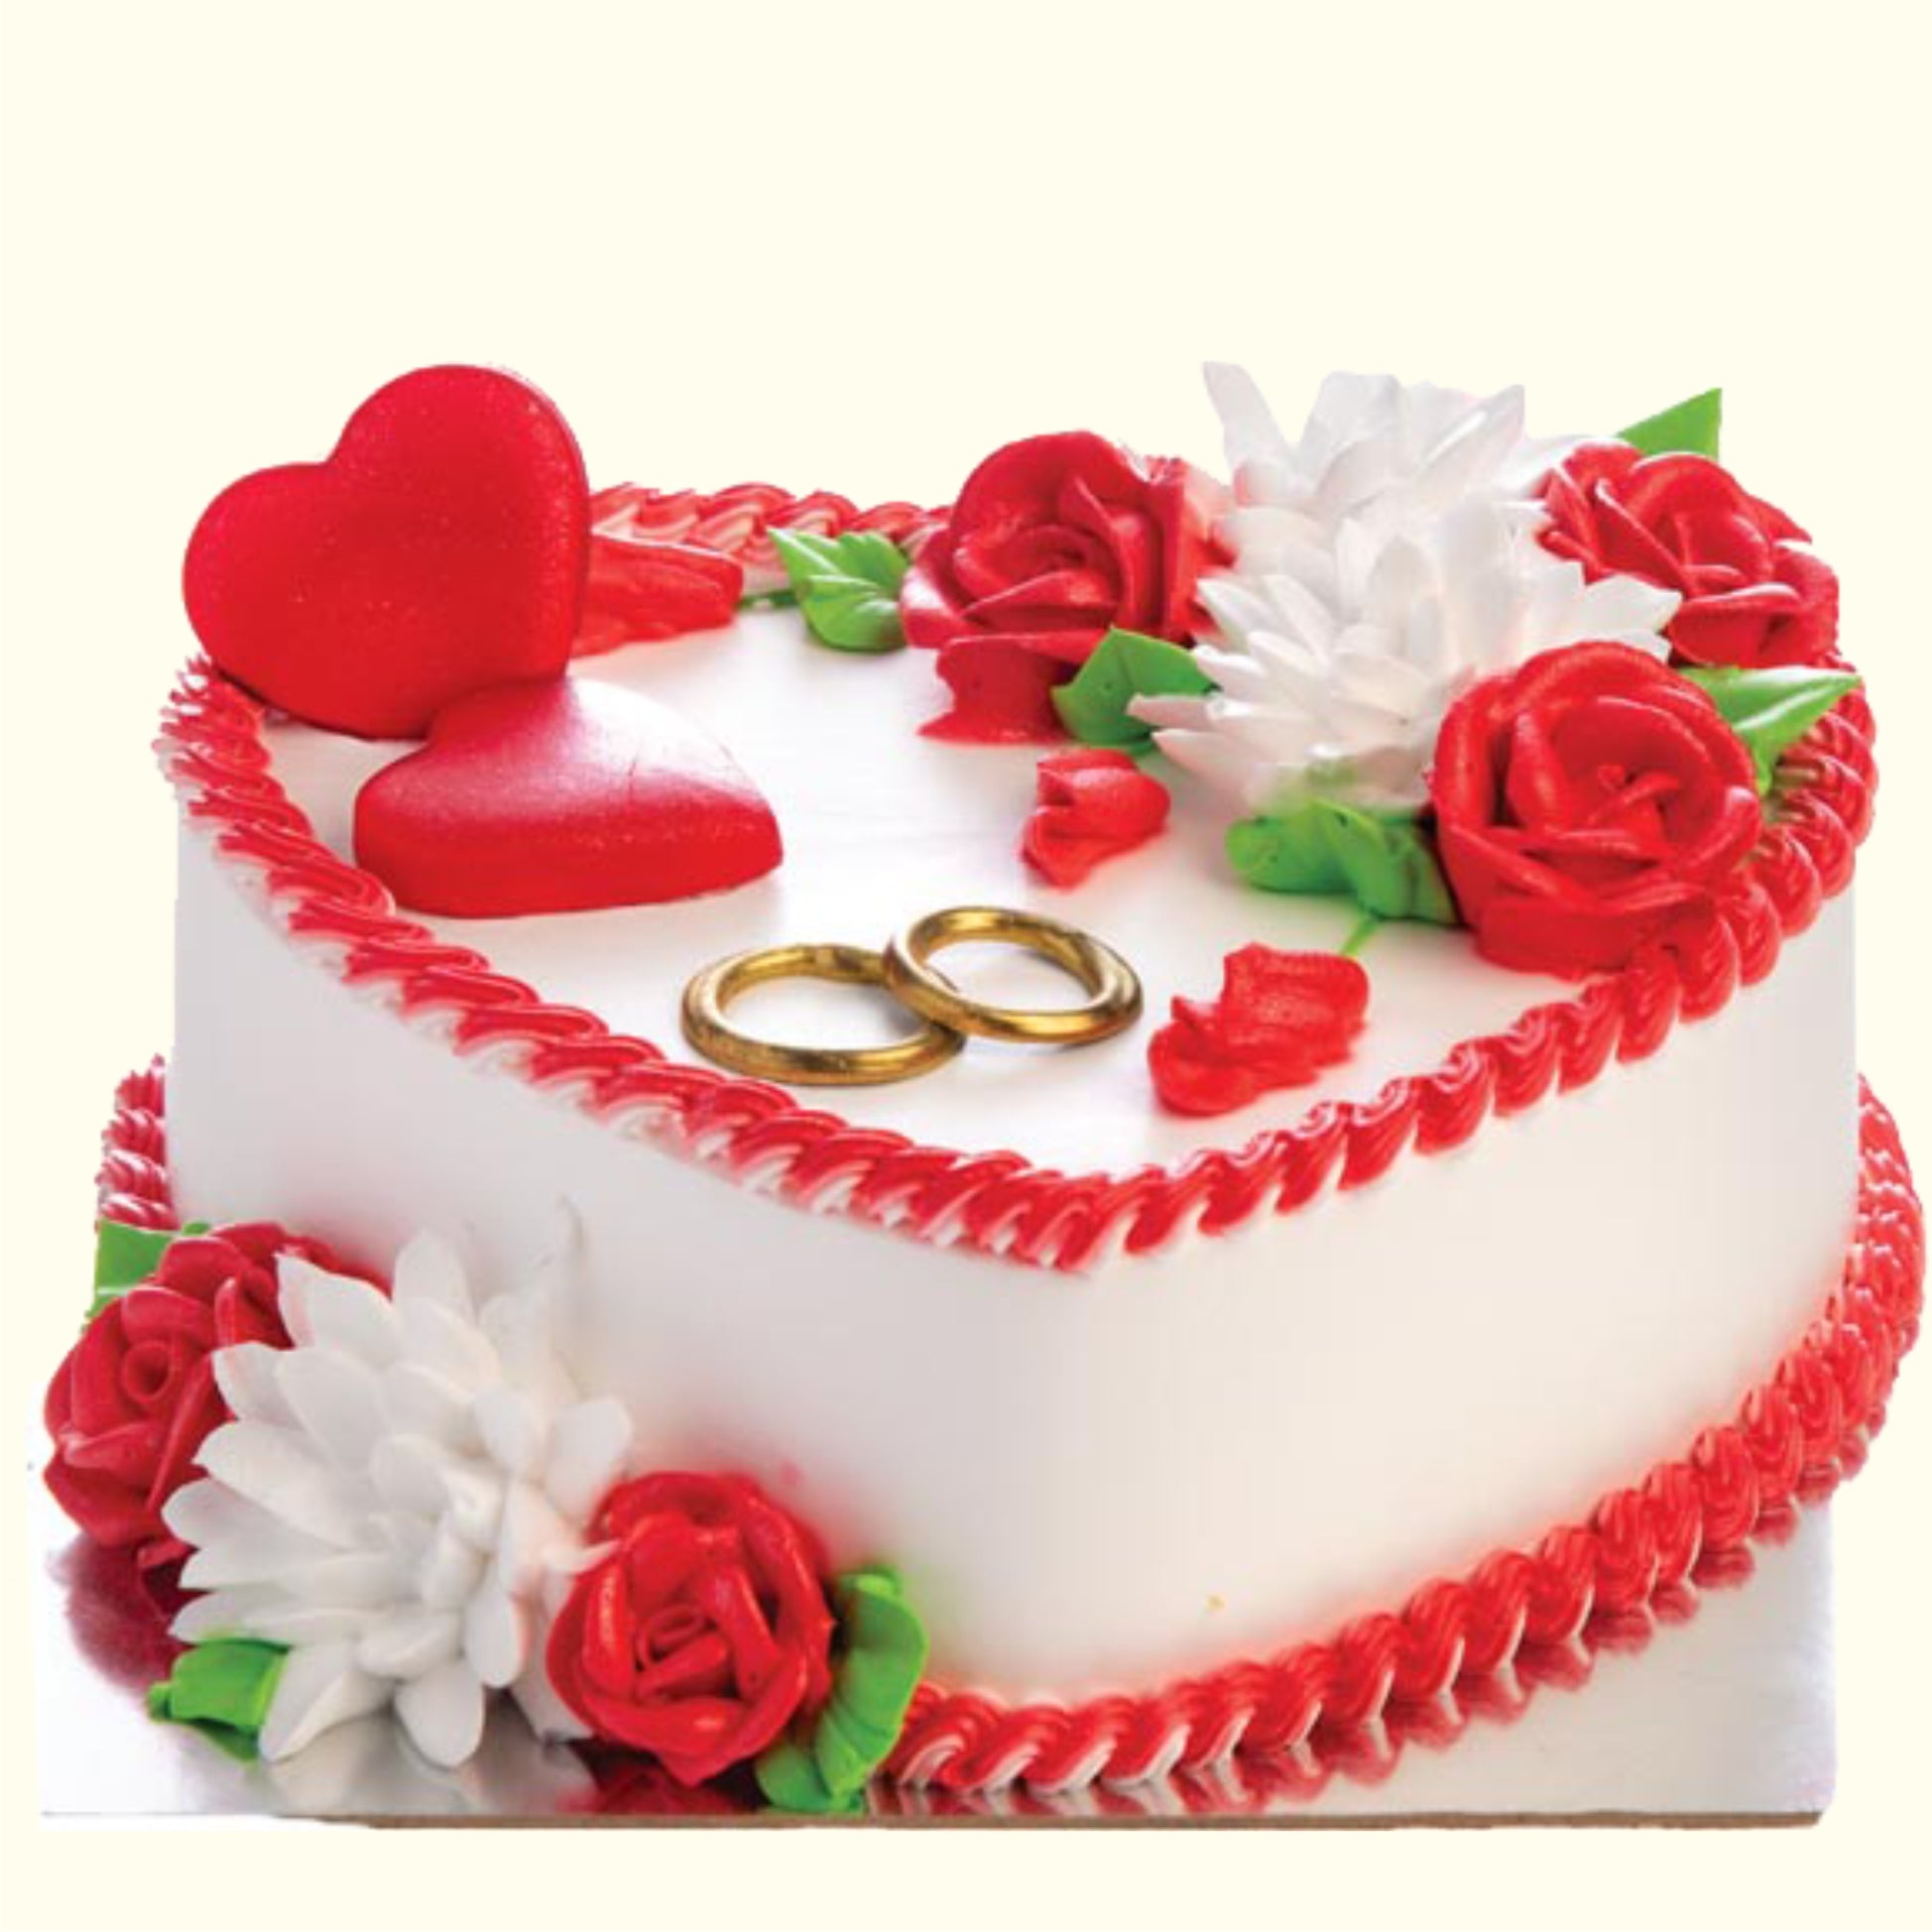 Send Wavy Wedding Cake 4 Kg Gifts To hyderabad